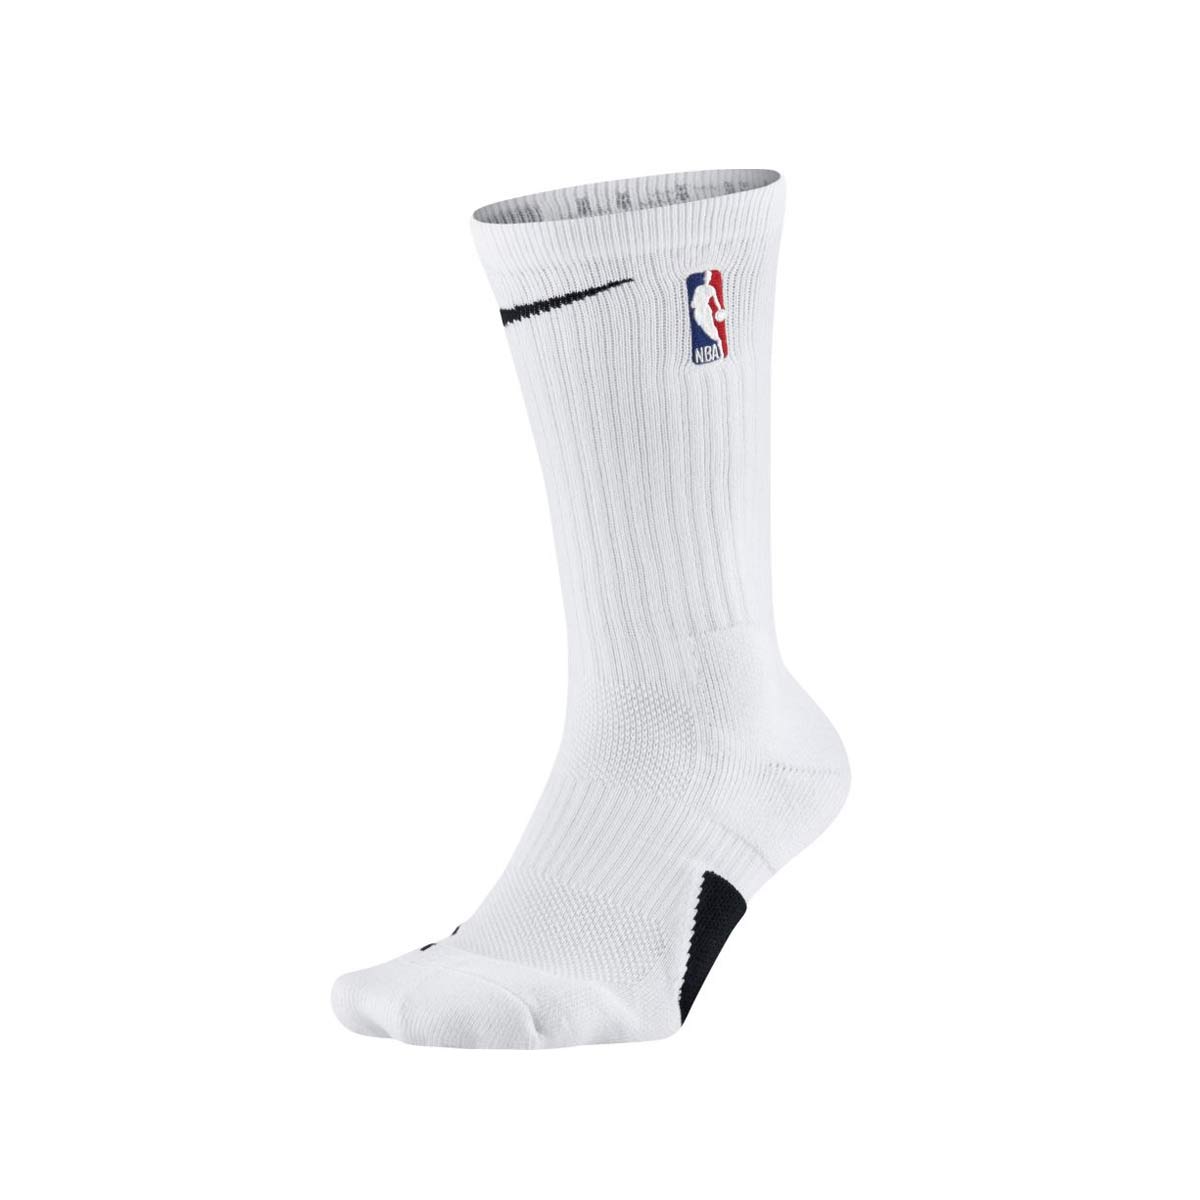 Elite NBA sock